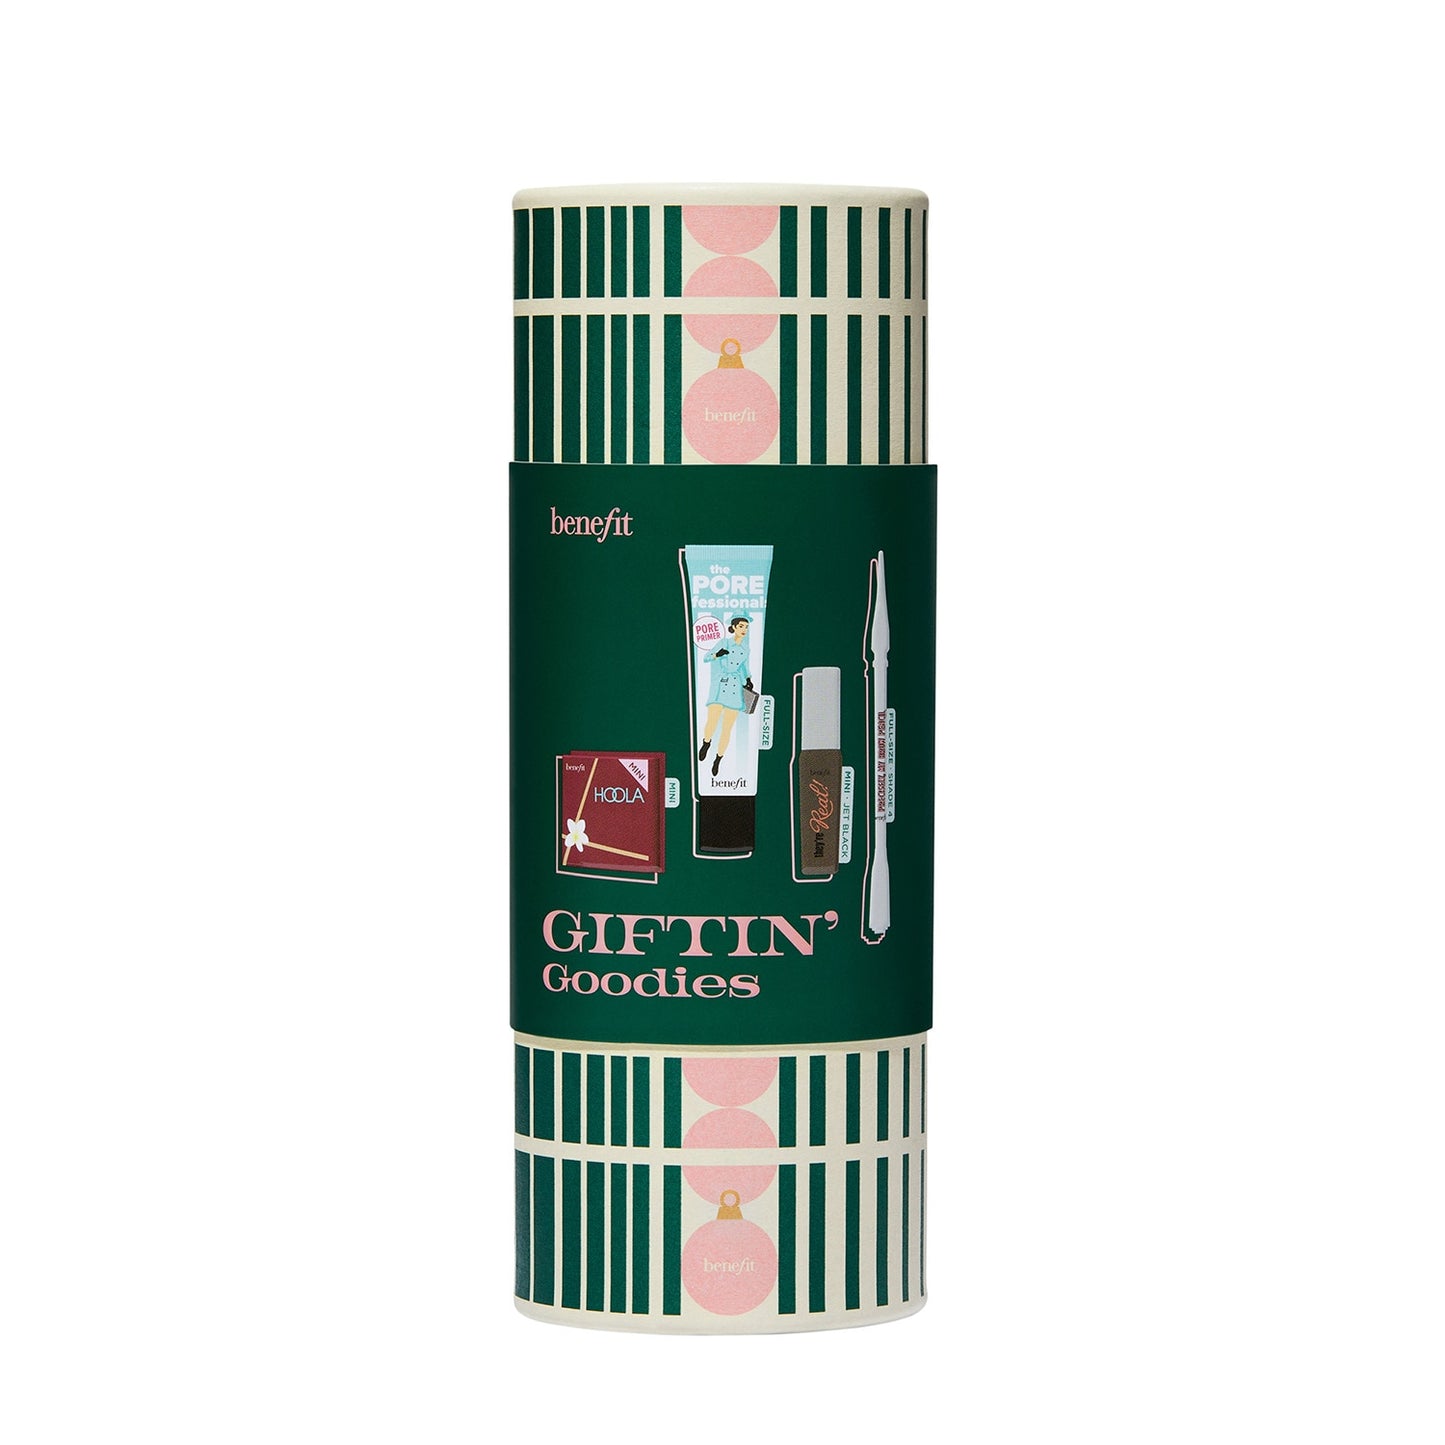 Giftin'Goodies - Benefit Cosmetics